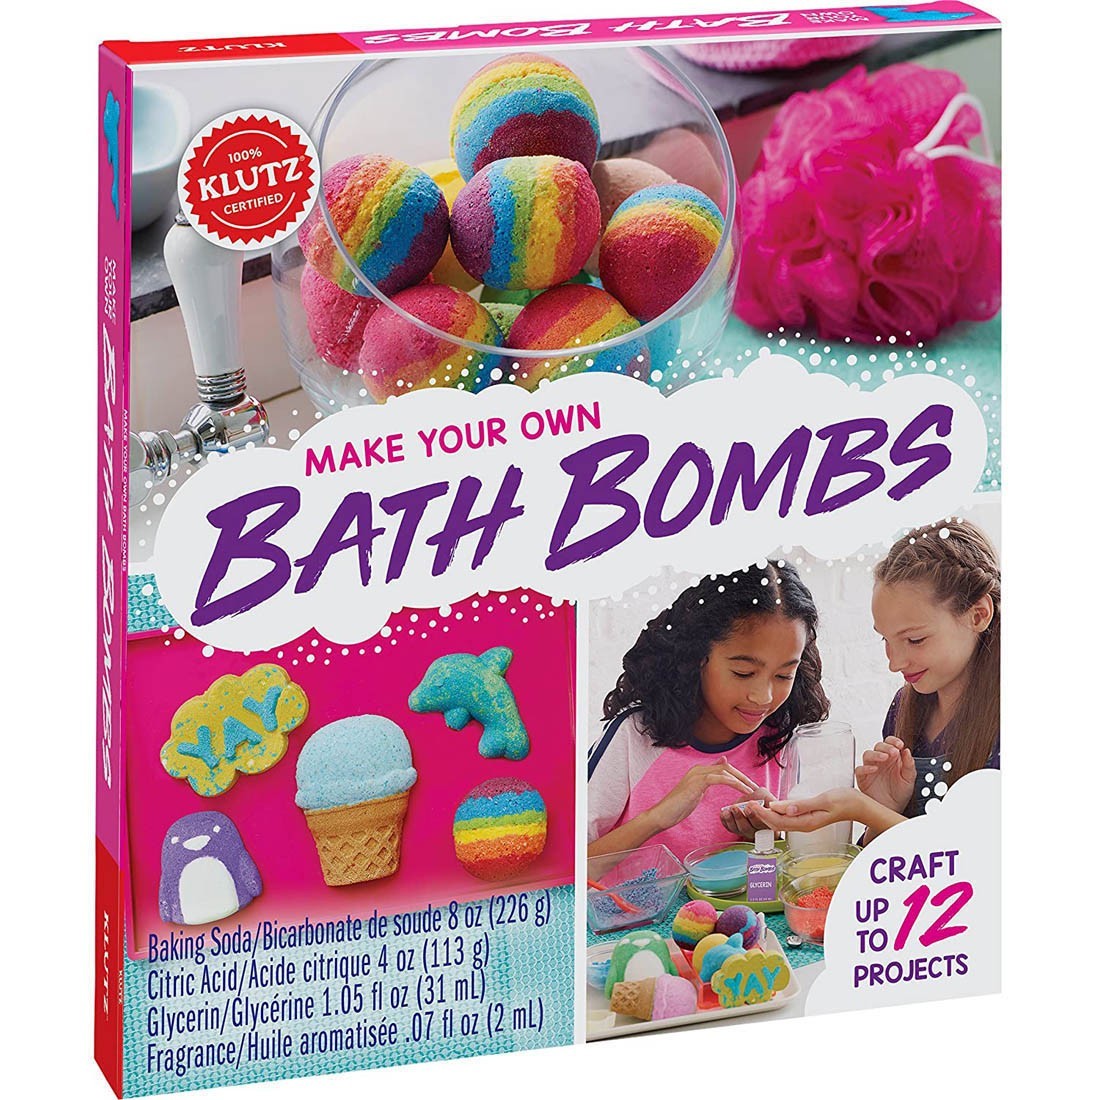 Klutz DIY Make Your Own Bath Bombs - BambiniJO | Buy Online | Jordan